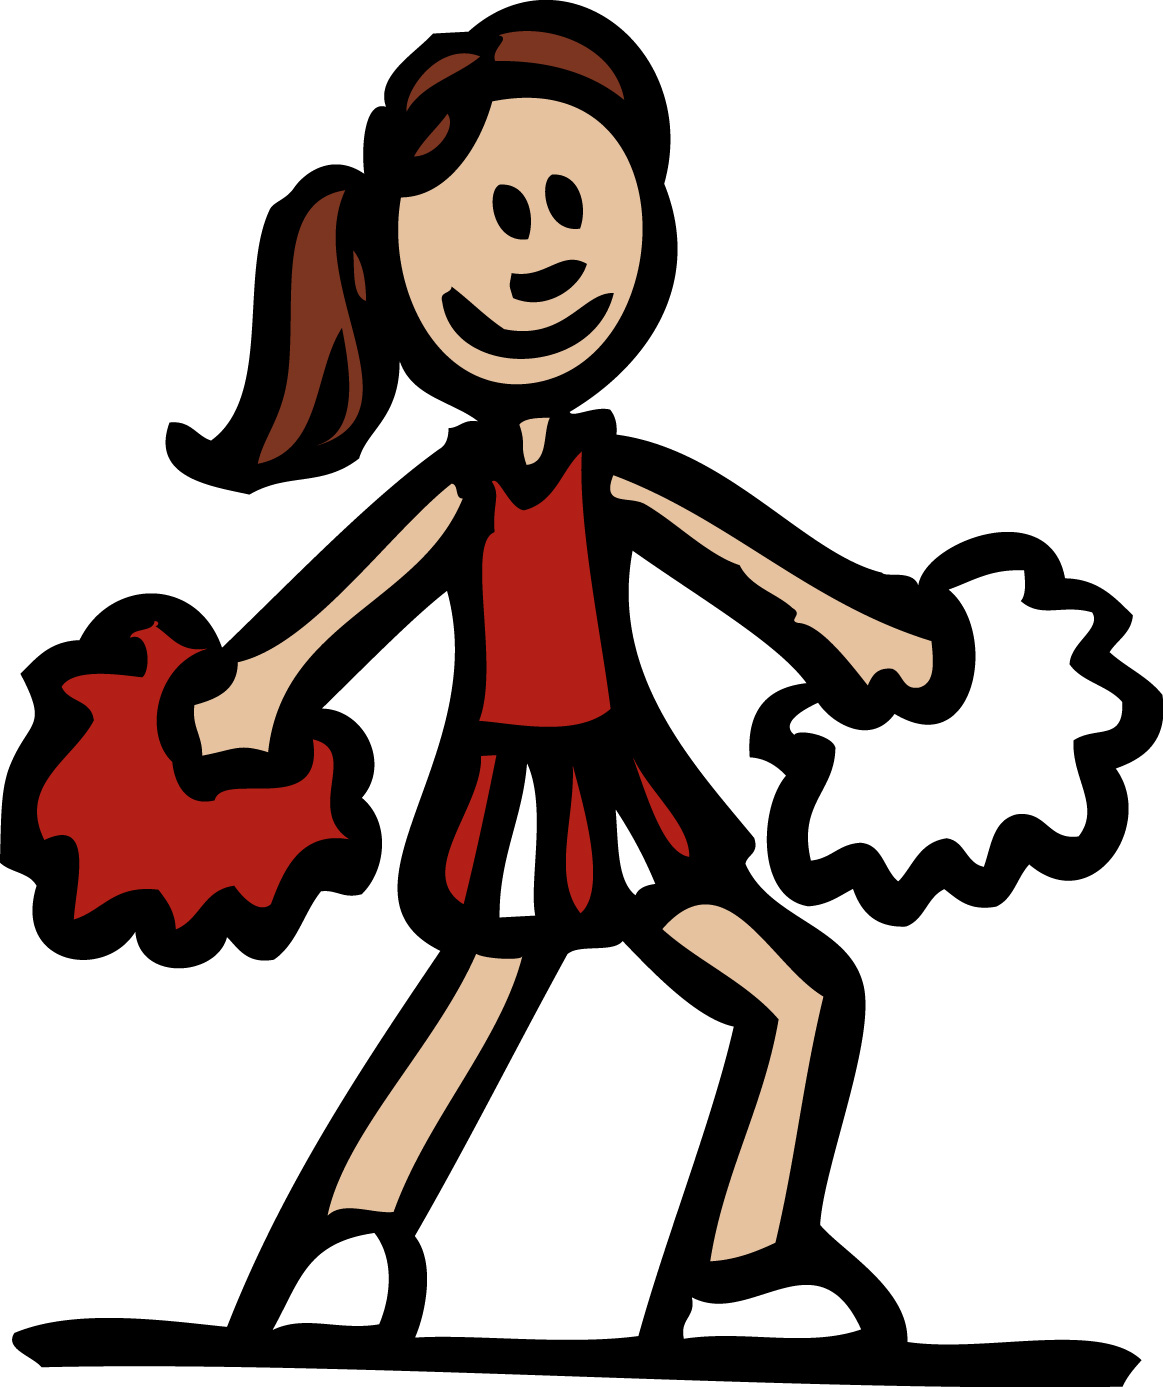 Cheerleader Graphics Clip Art - ClipArt Best